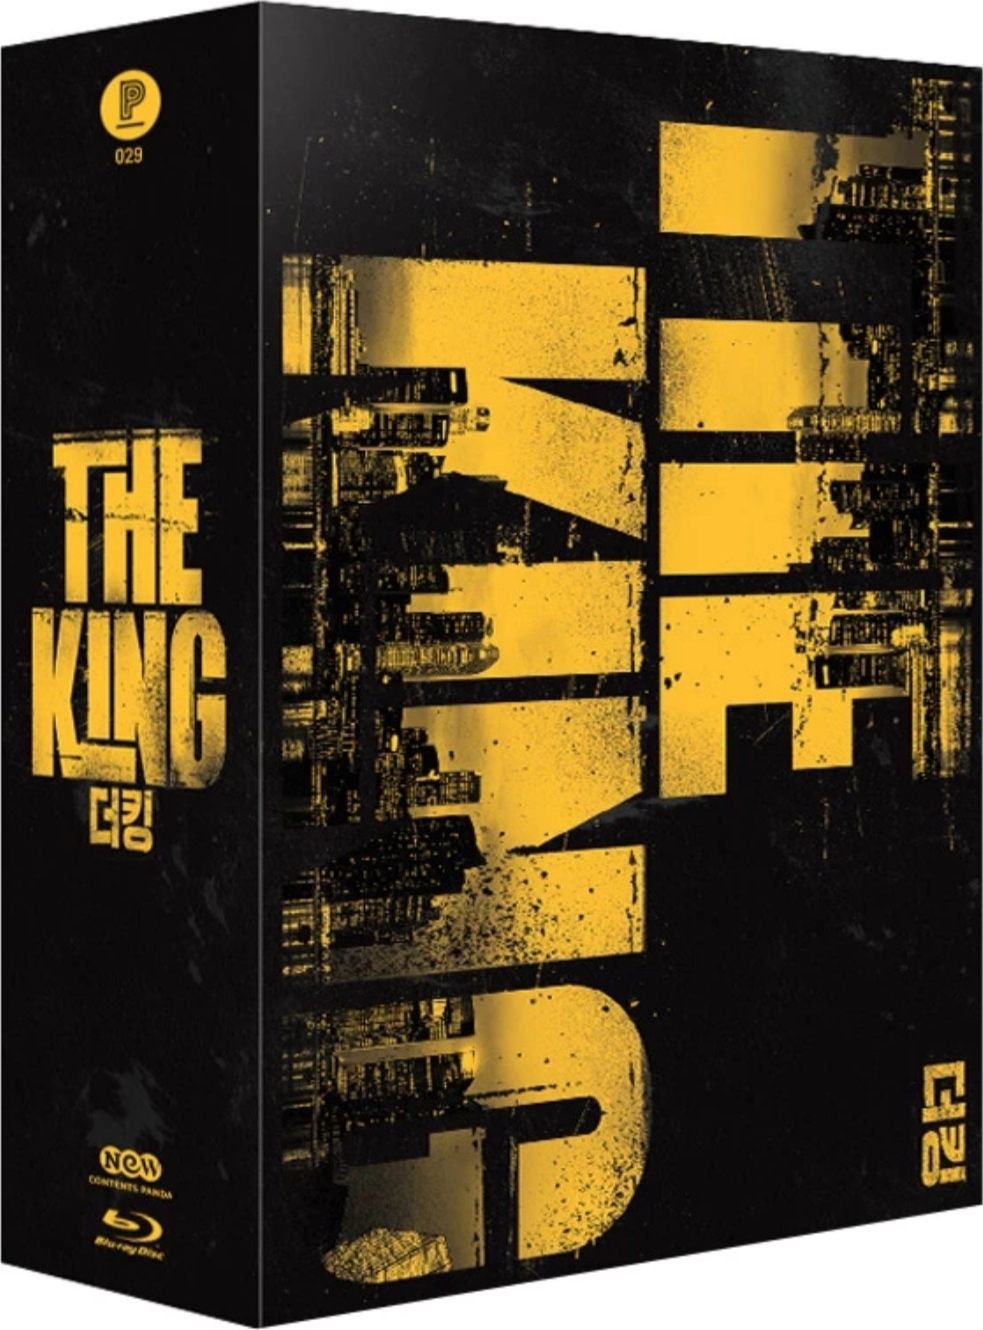 Magi The Kingdom of Magic - Season 2 Part 2 Blu-ray - Zavvi UK